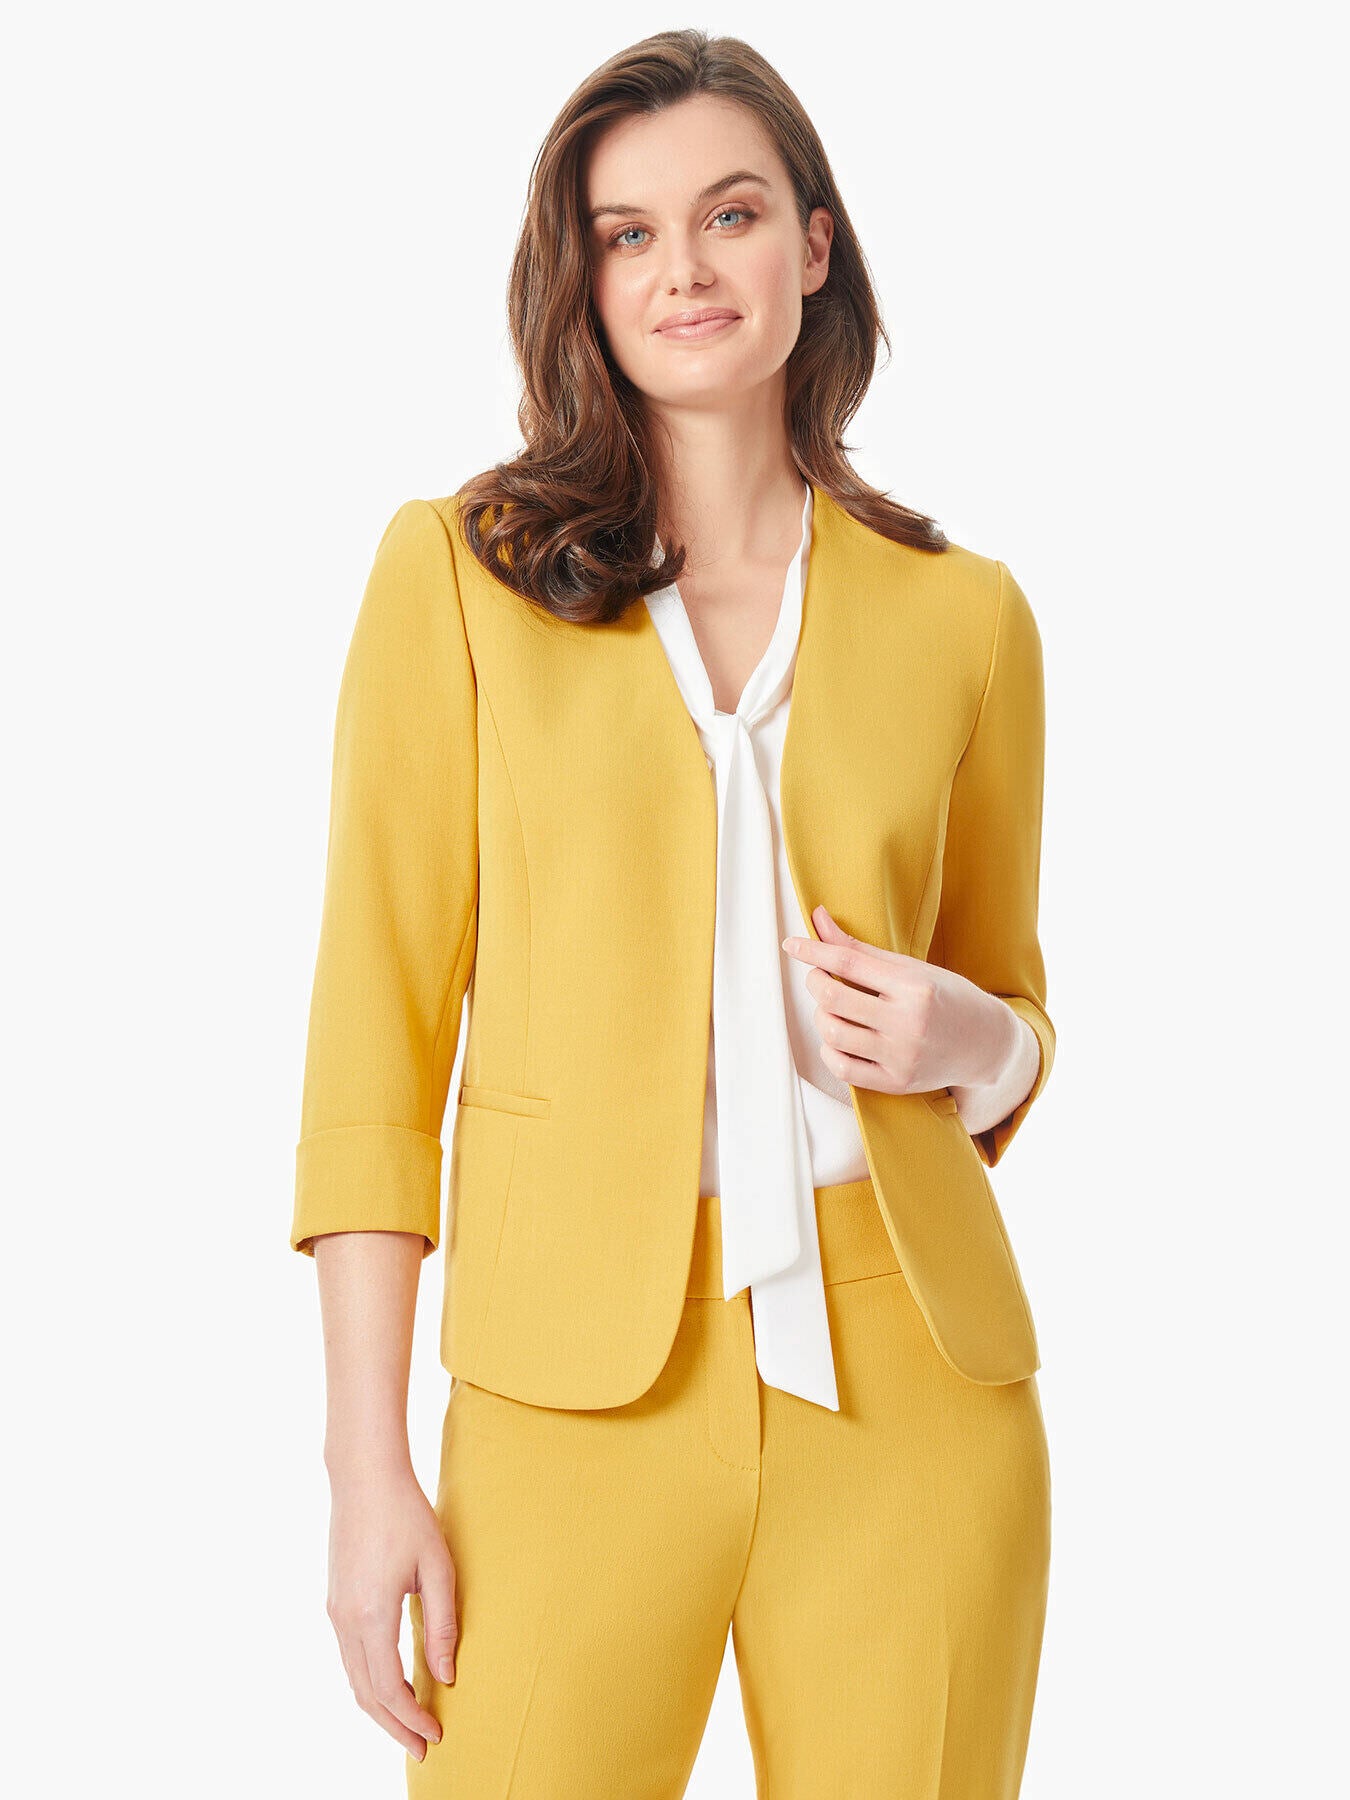 $129 Kasper Women's Textured Pique One-Button Blazer Suit Jacket Plus Size  24W